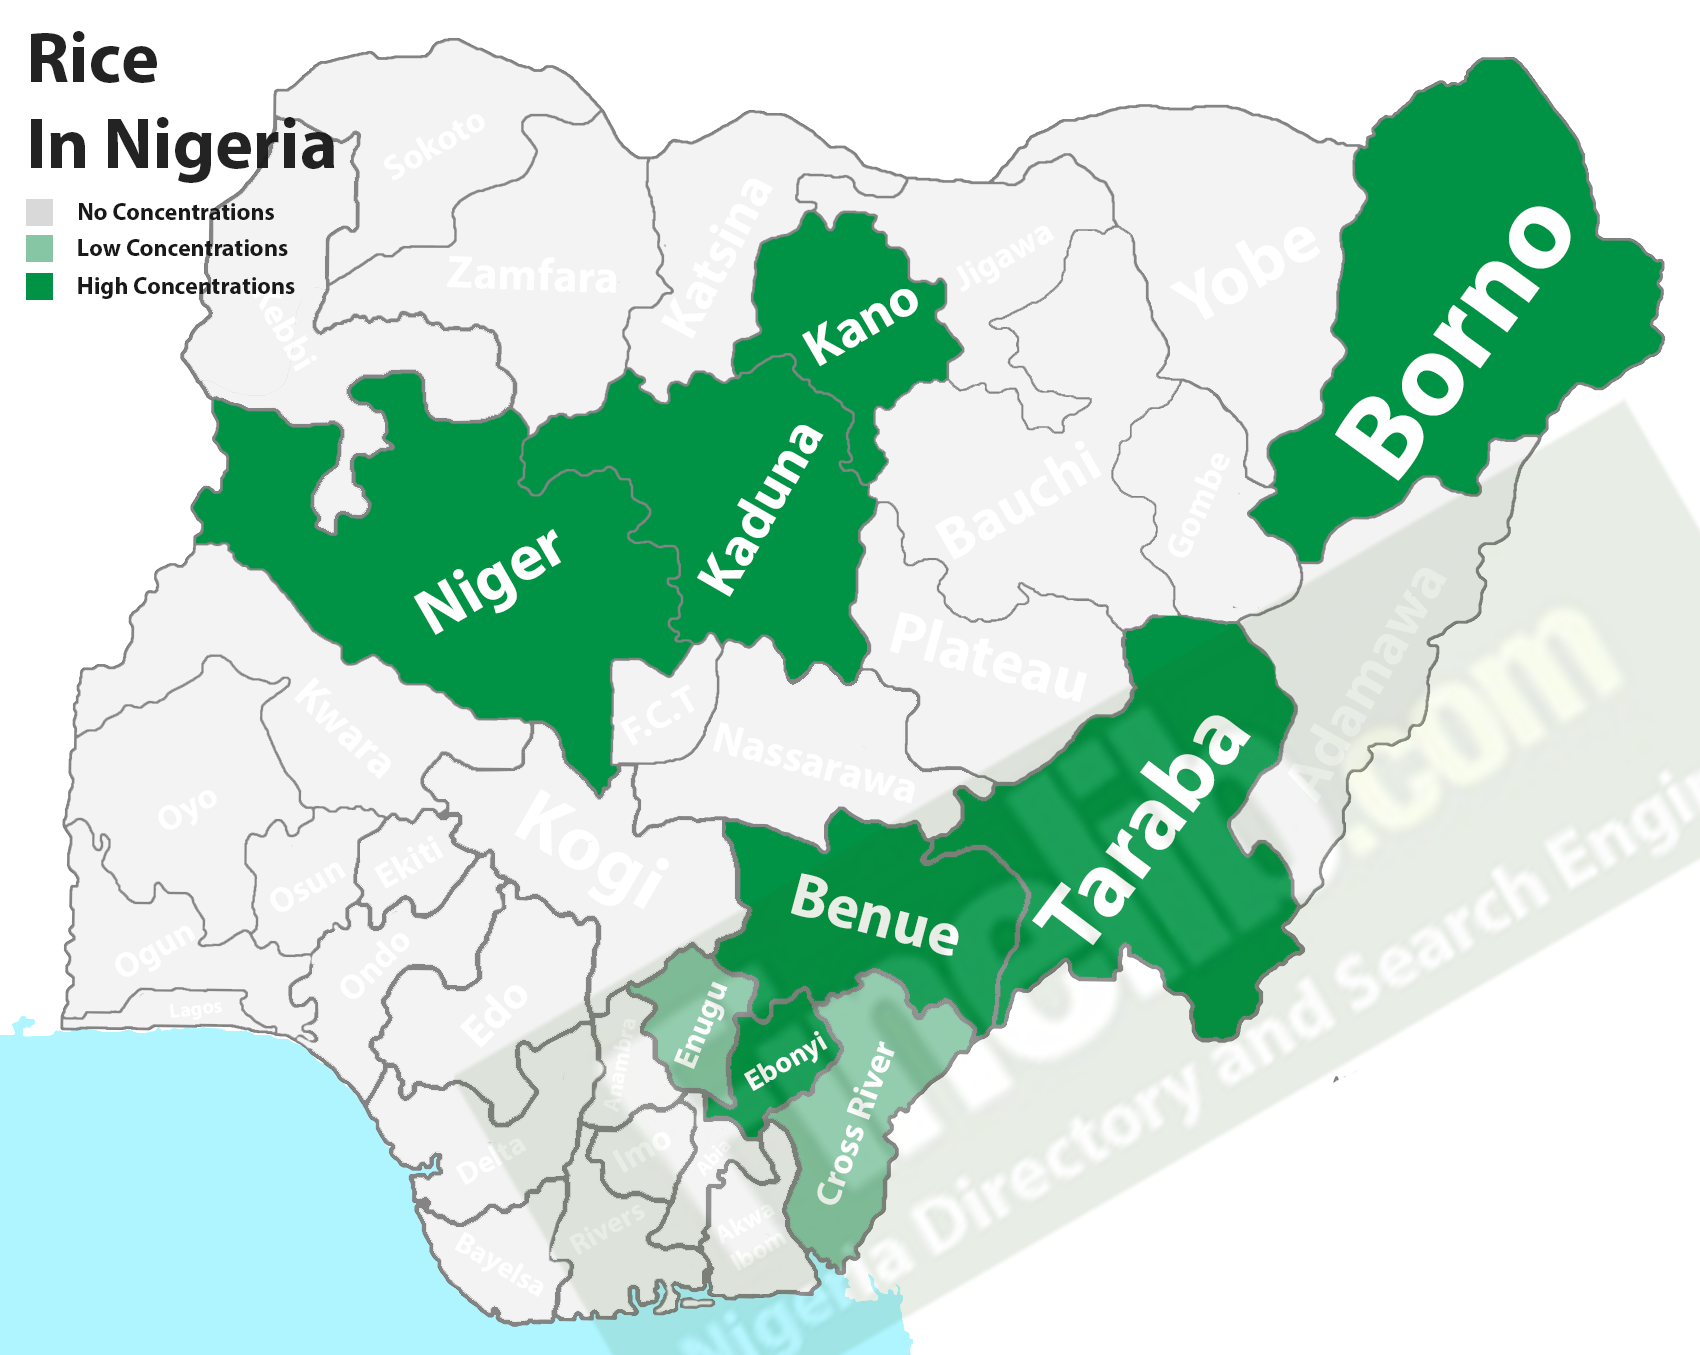 Rice producing states in Nigeria